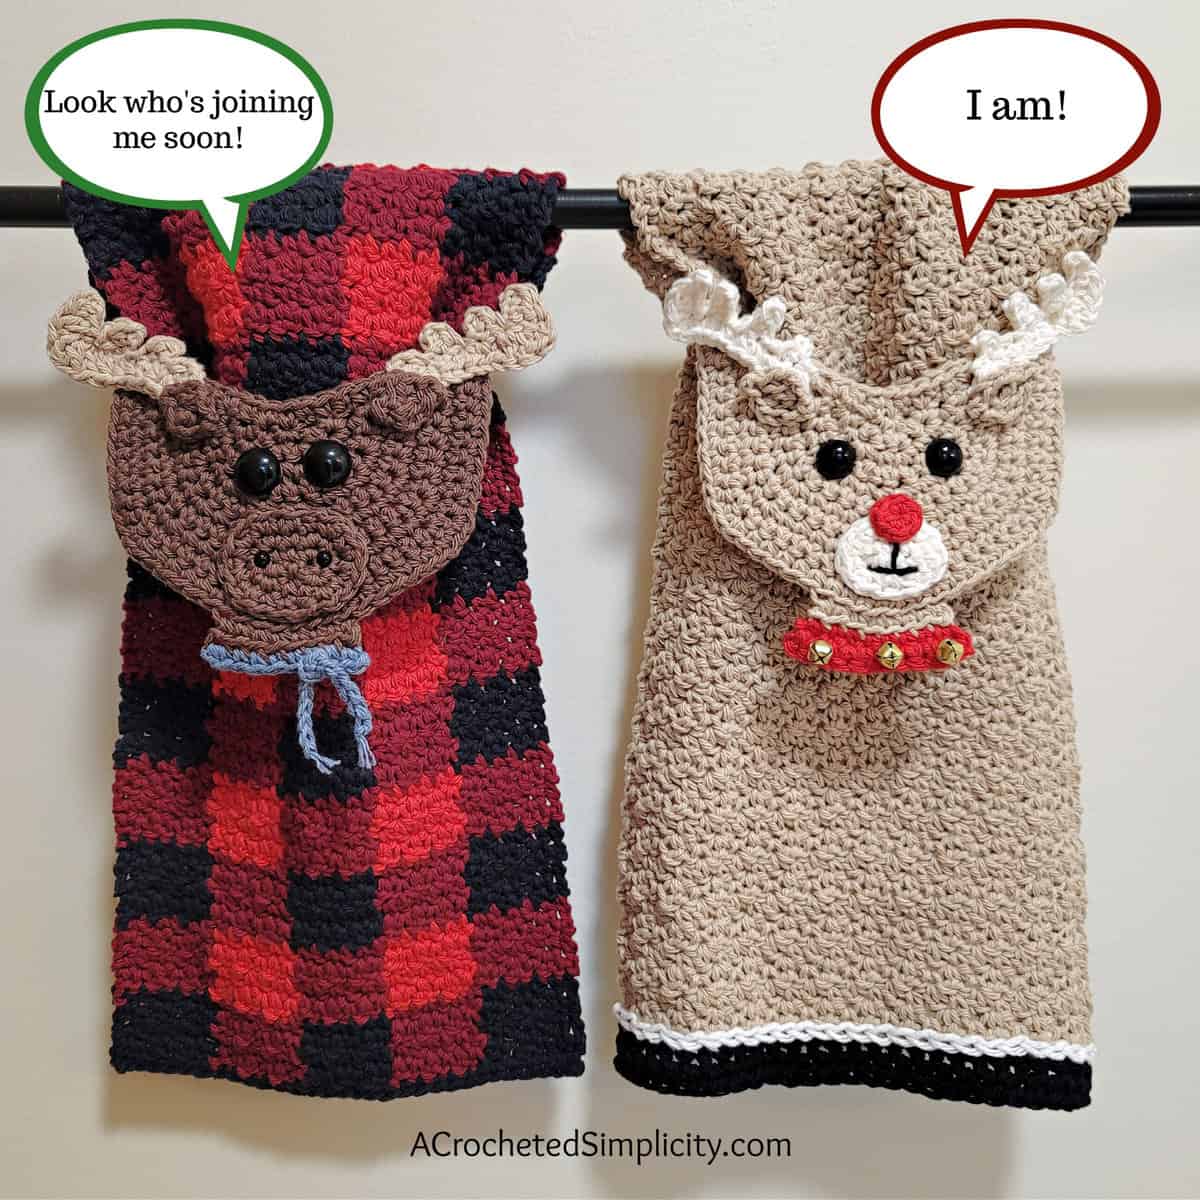 Free Crochet Pattern - Plaid Moose Kitchen Towel by A Crocheted Simplicity #crochetplaid #freecrochetpattern #crochetmoose #crochetkitchentowel #freecrochetmoose #freecrochettowel #plaidmoose #plaiddecor #plaidkitchentowel #plaidmoosedecore